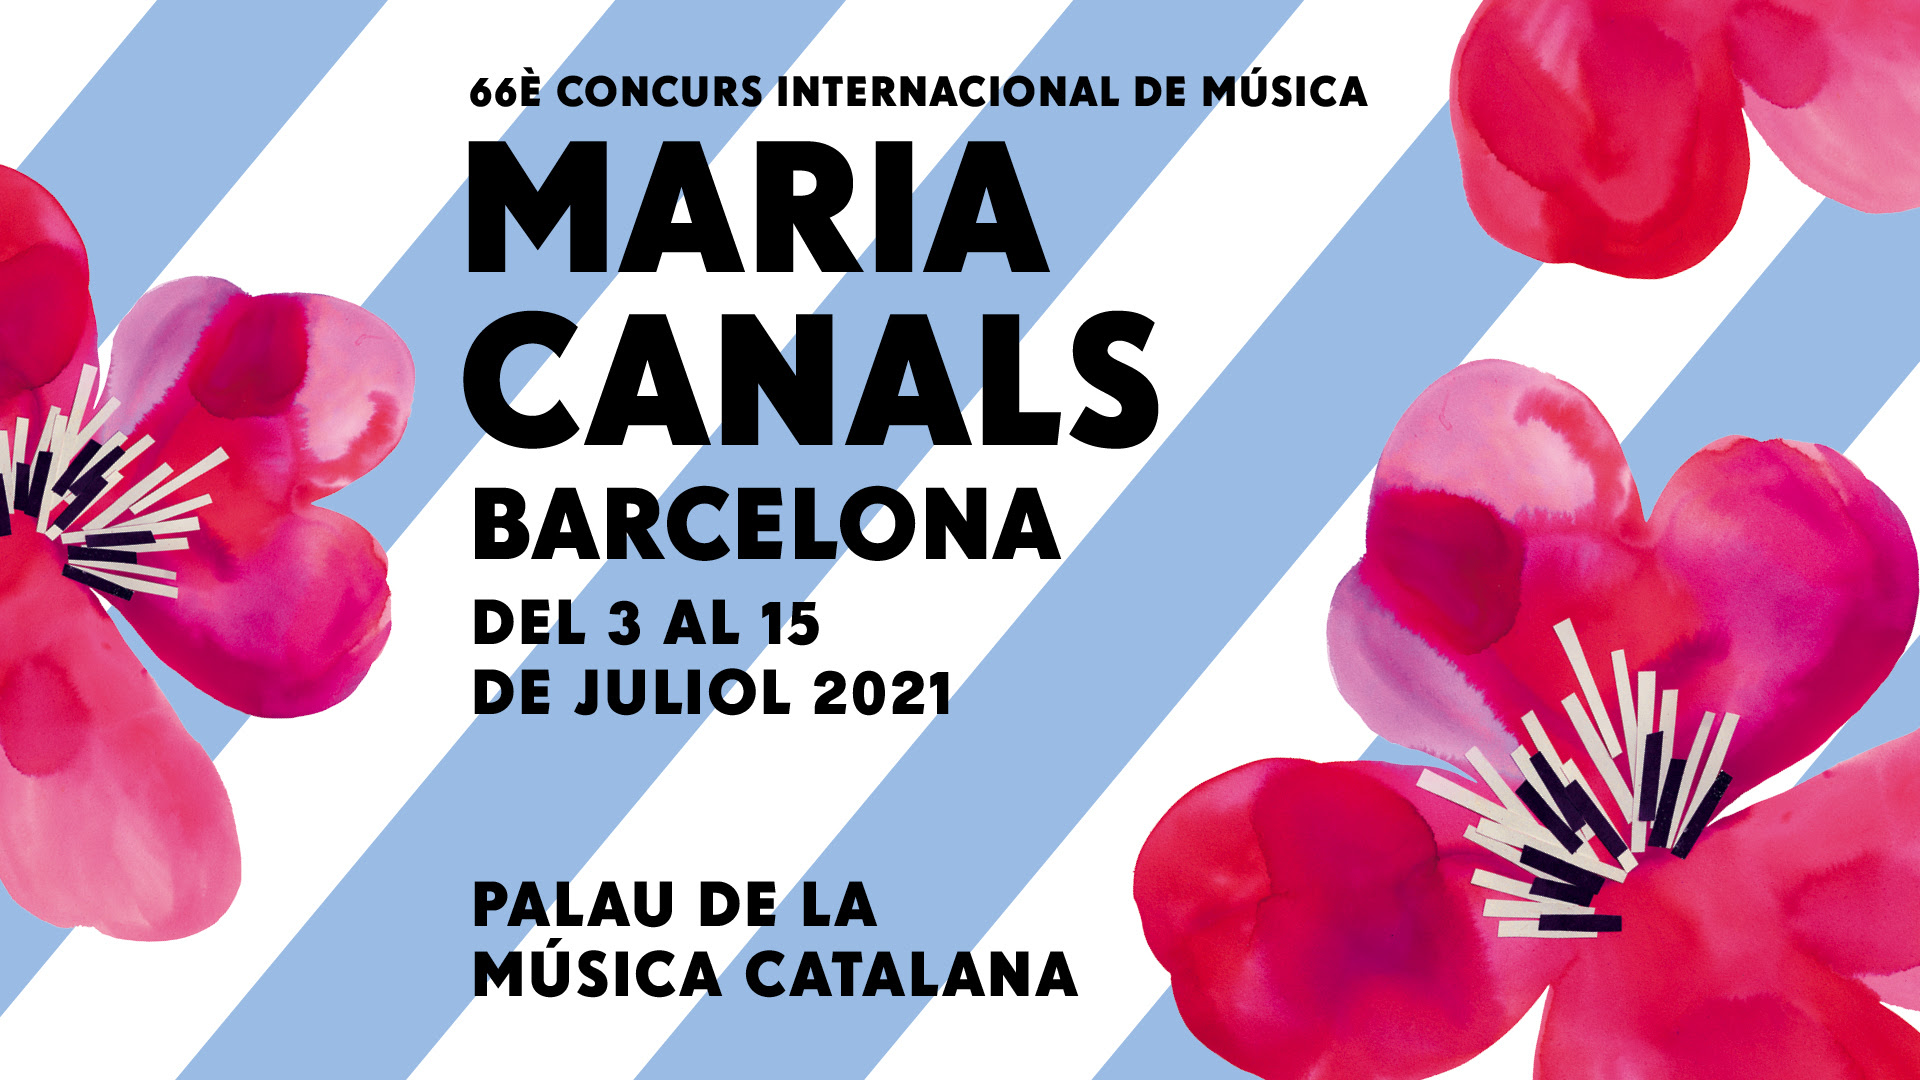 66-concurso-maria-canals-barcelona